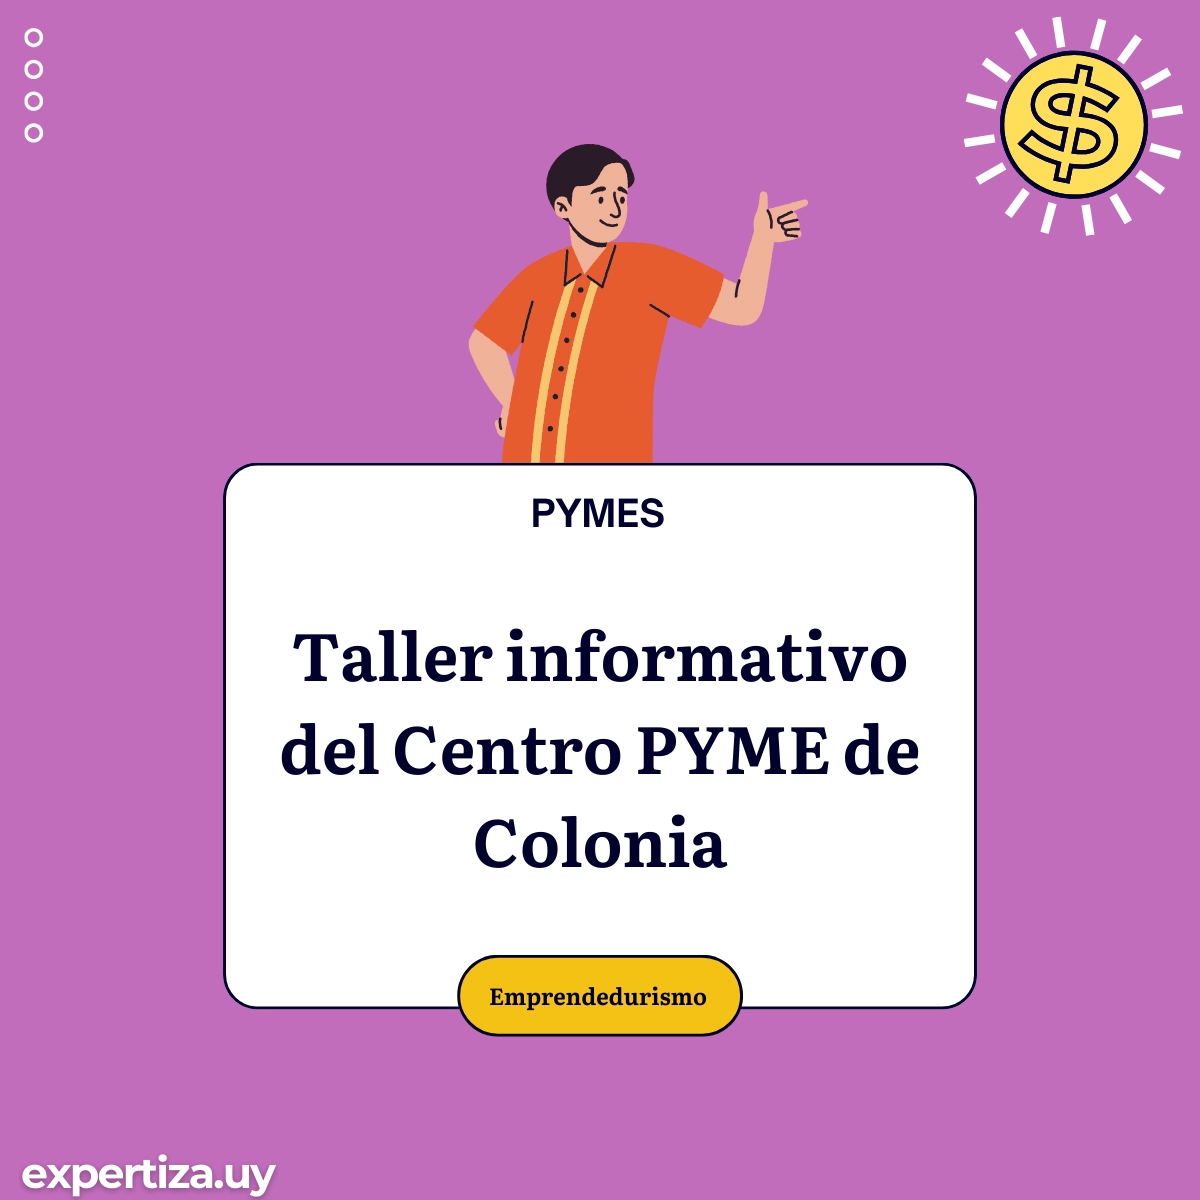 Taller informativo del Centro PYME de Colonia.